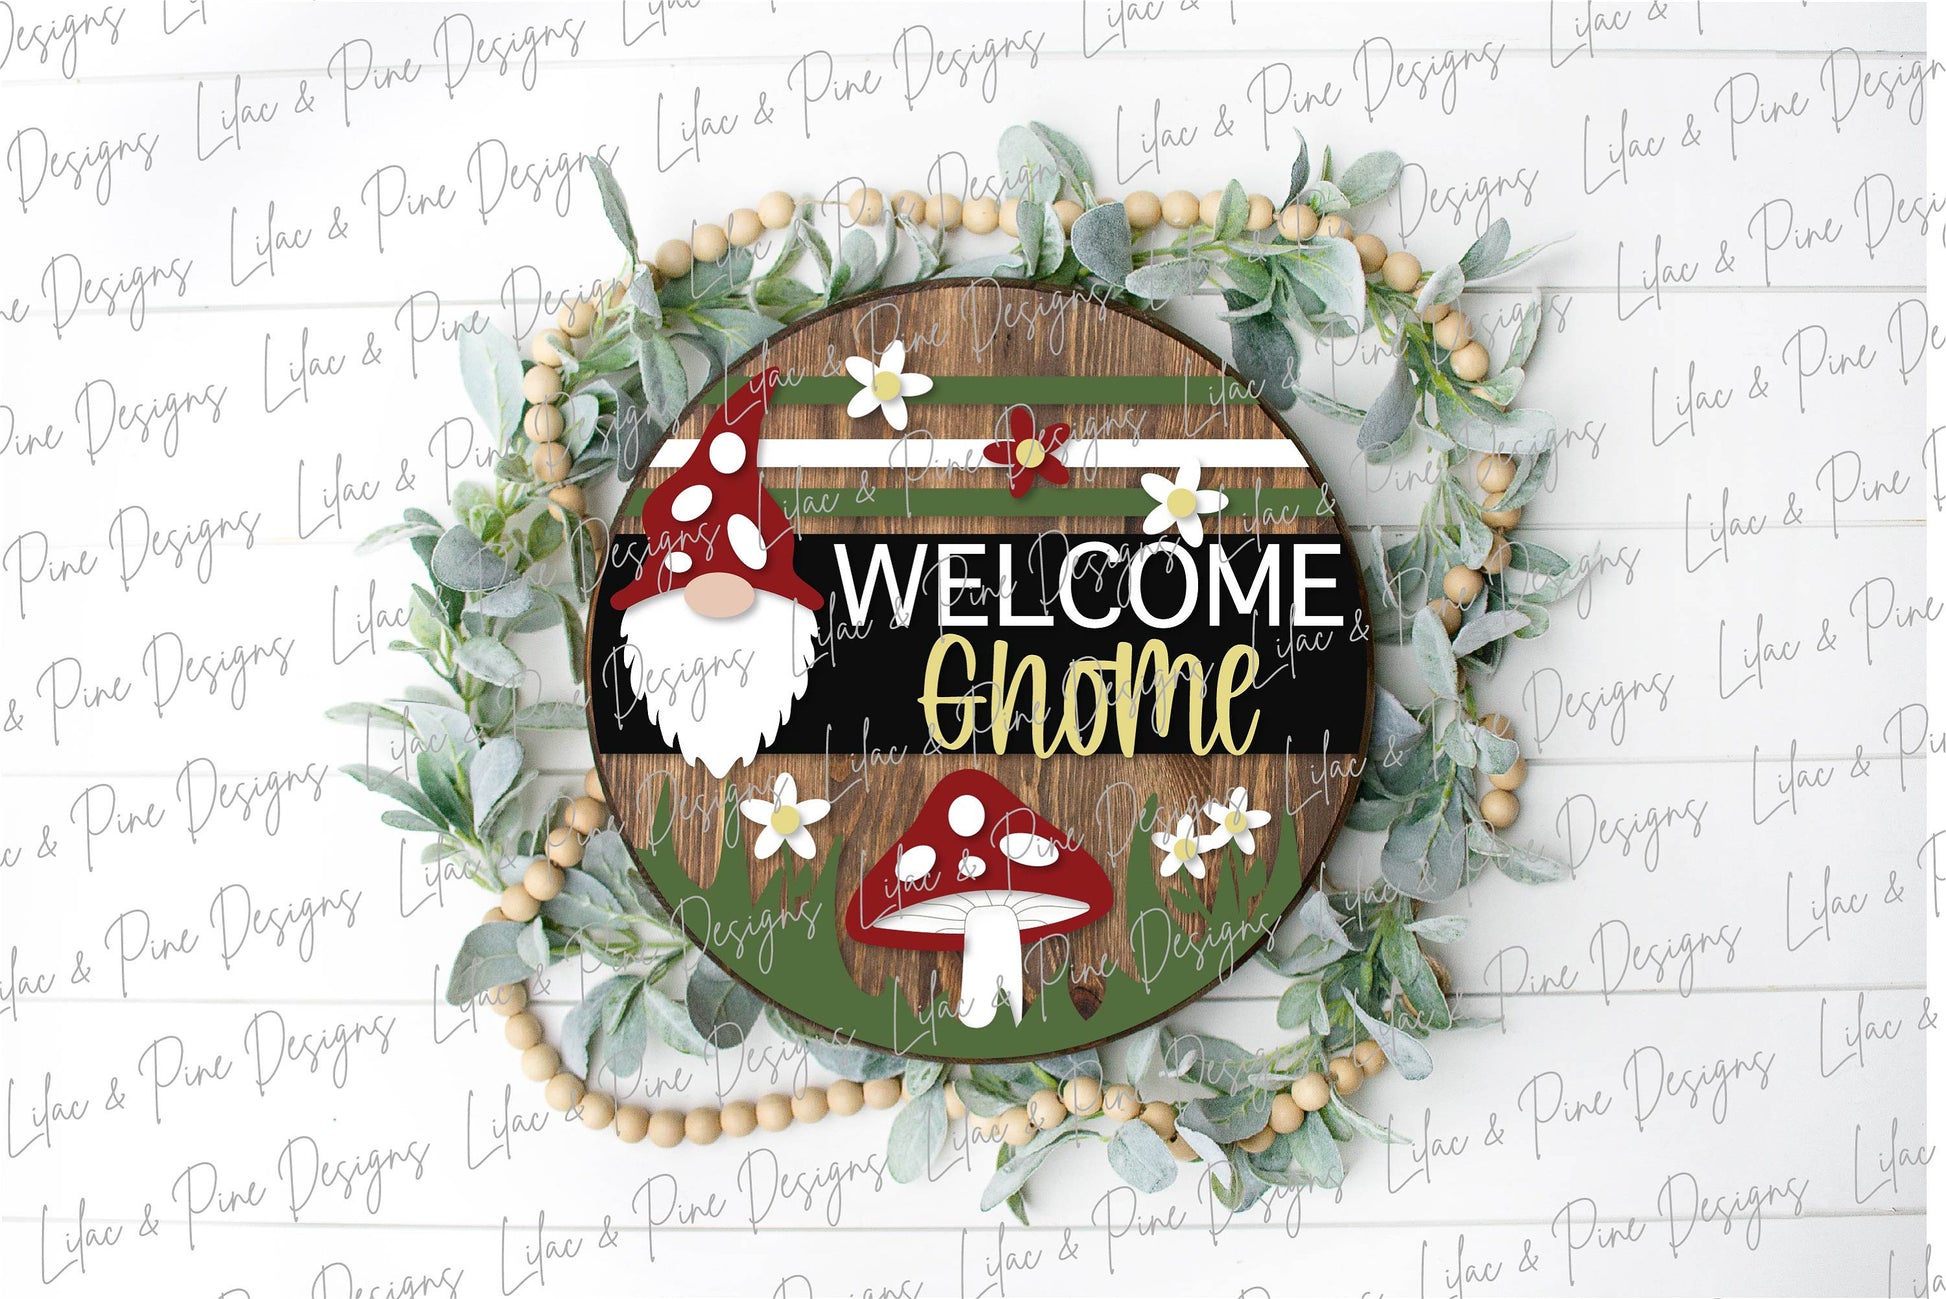 Welcome Gnome door hanger, mushroom SVG, garden gnome SVG, welcome round SVG, fairy garden svg, gnome decor, Glowforge Svg, laser cut file